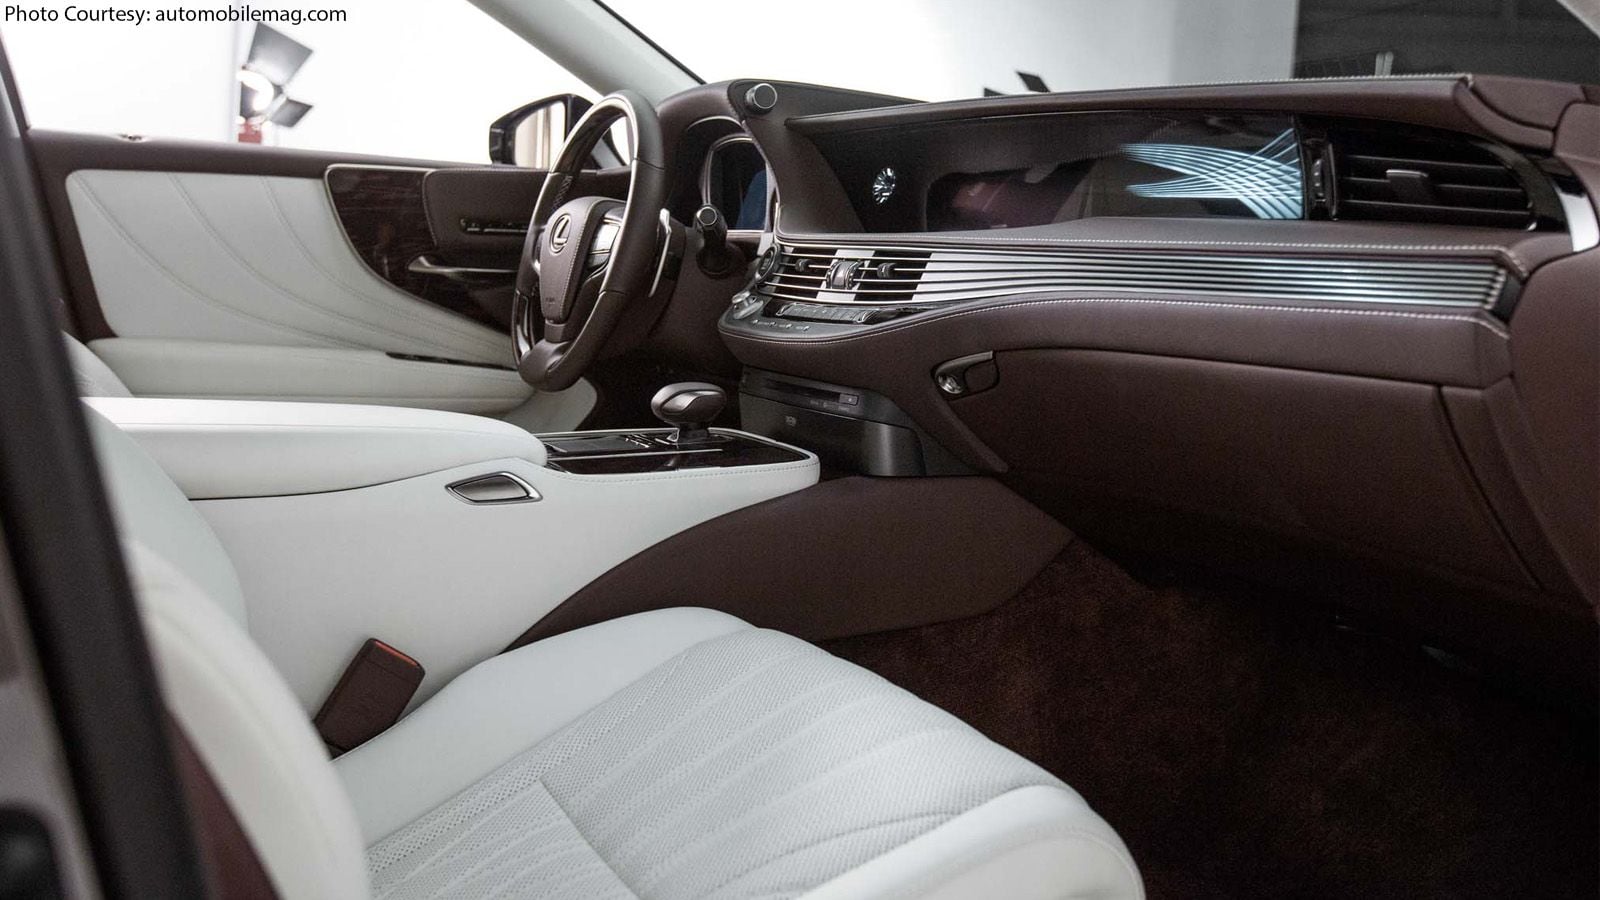 The Lexus 2018 LS500's Interior is Beyond Impressive